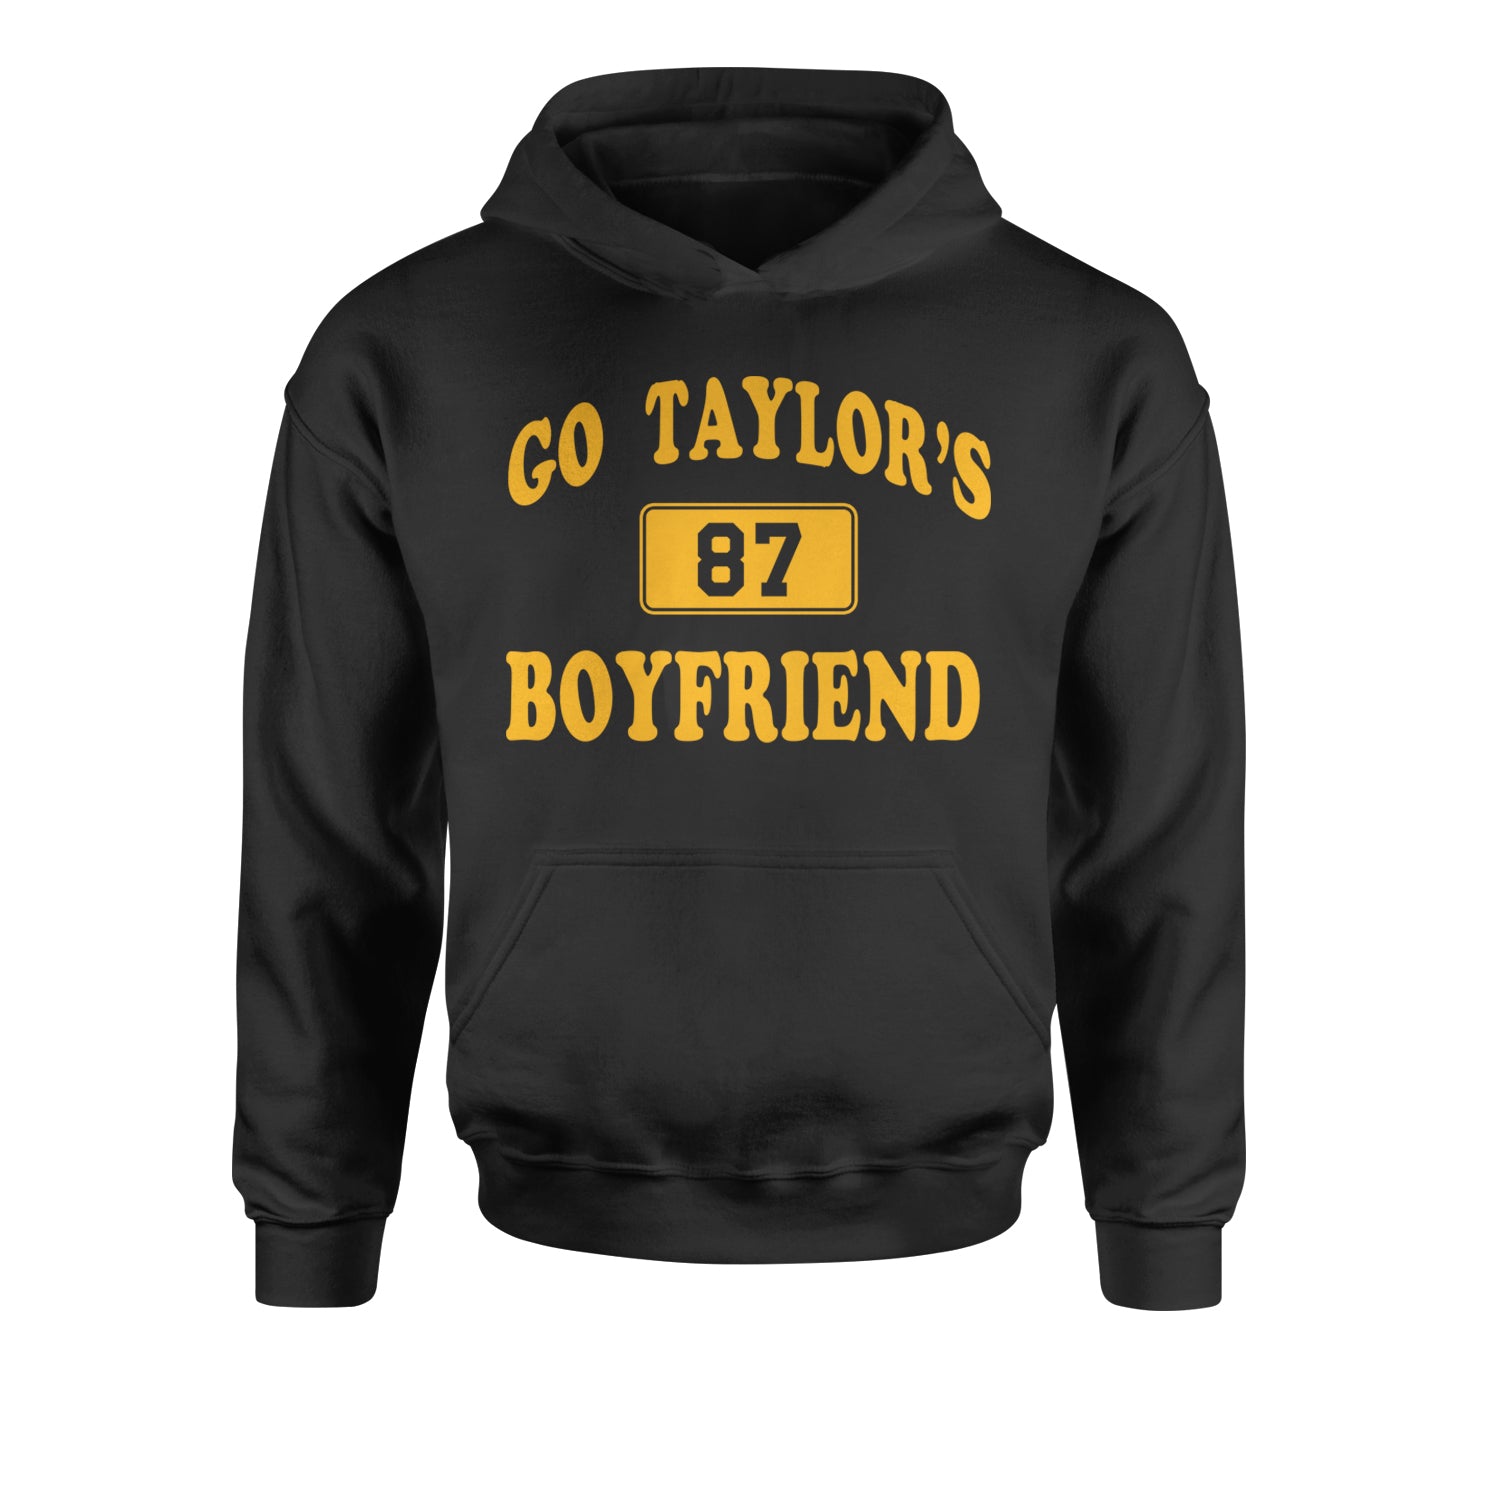 Go Taylor's Boyfriend Kansas City Youth-Sized Hoodie